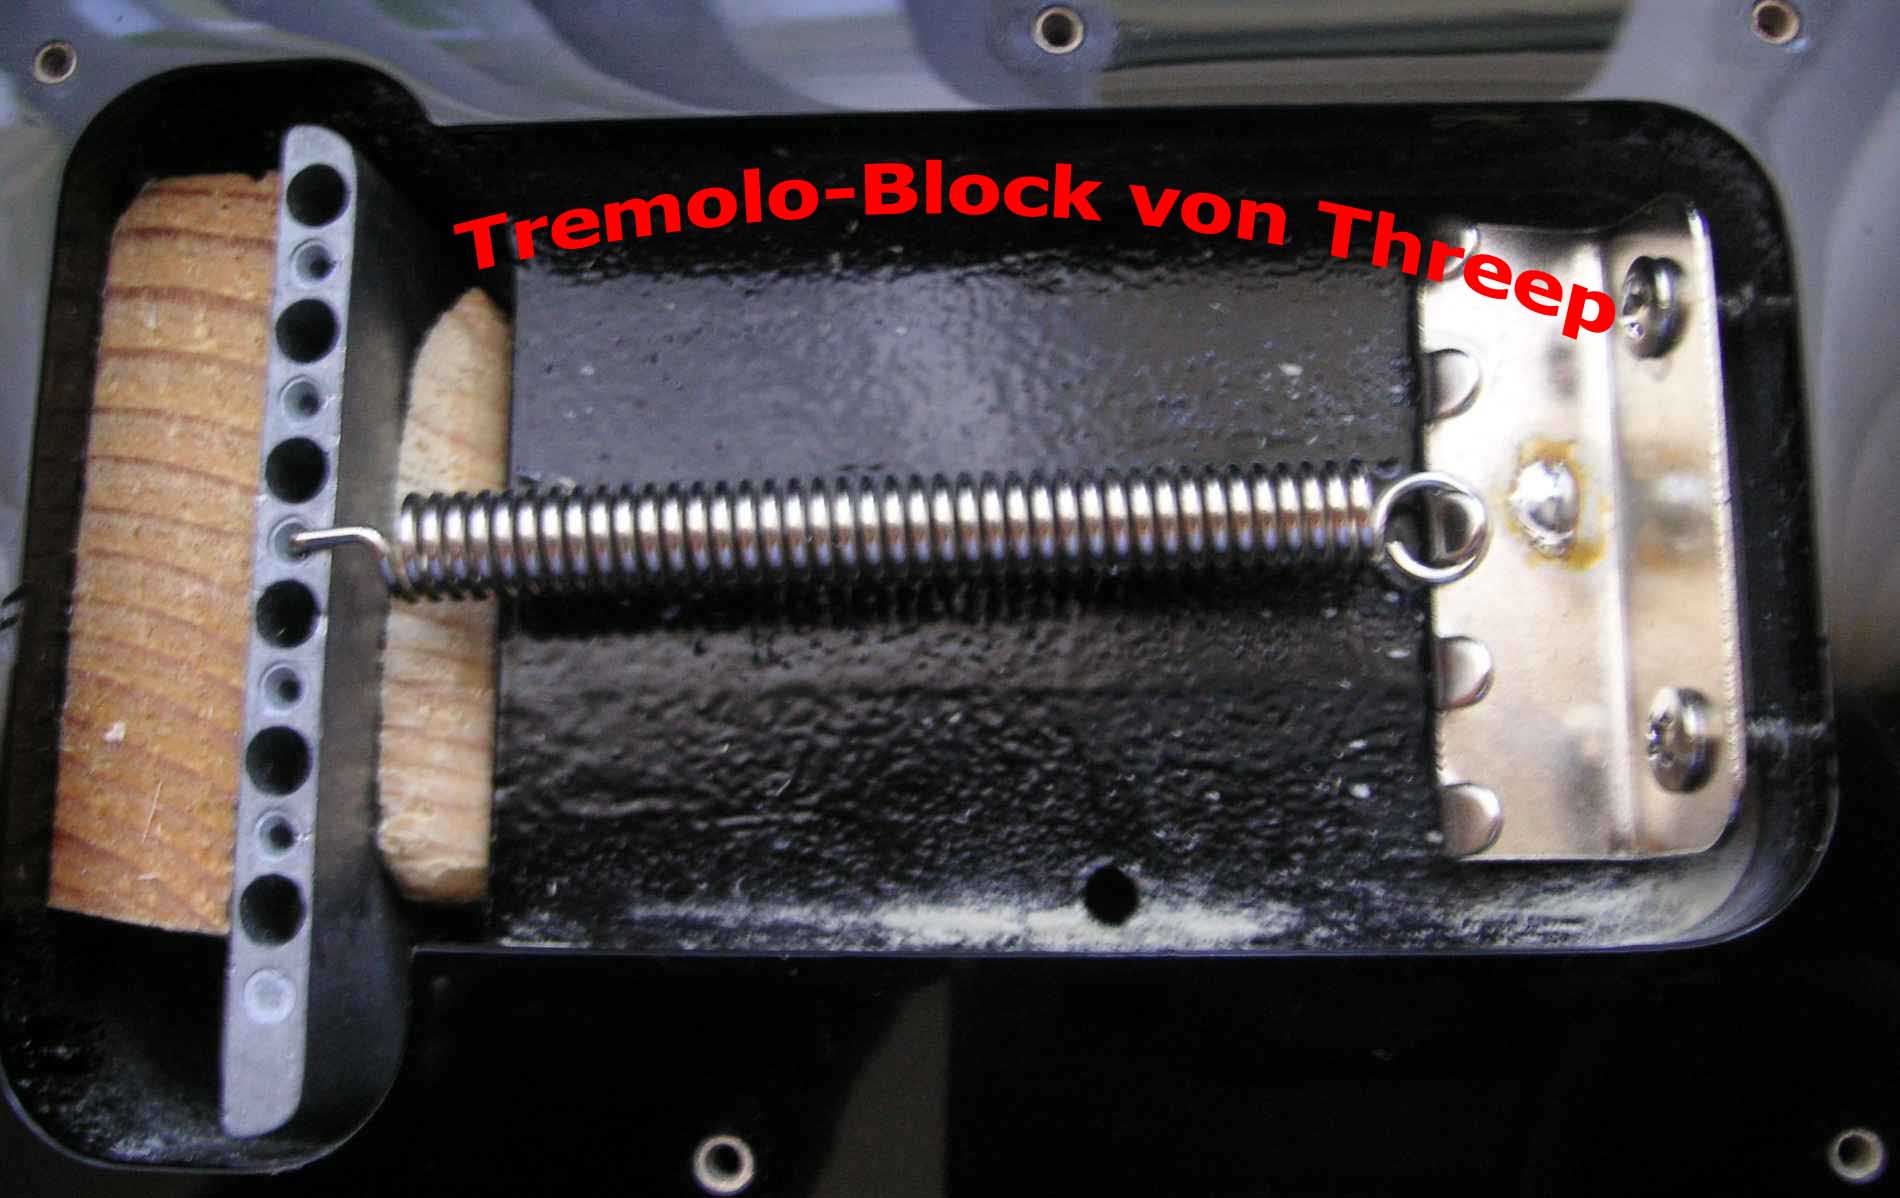 tremolo-block-threep-jpg.39026